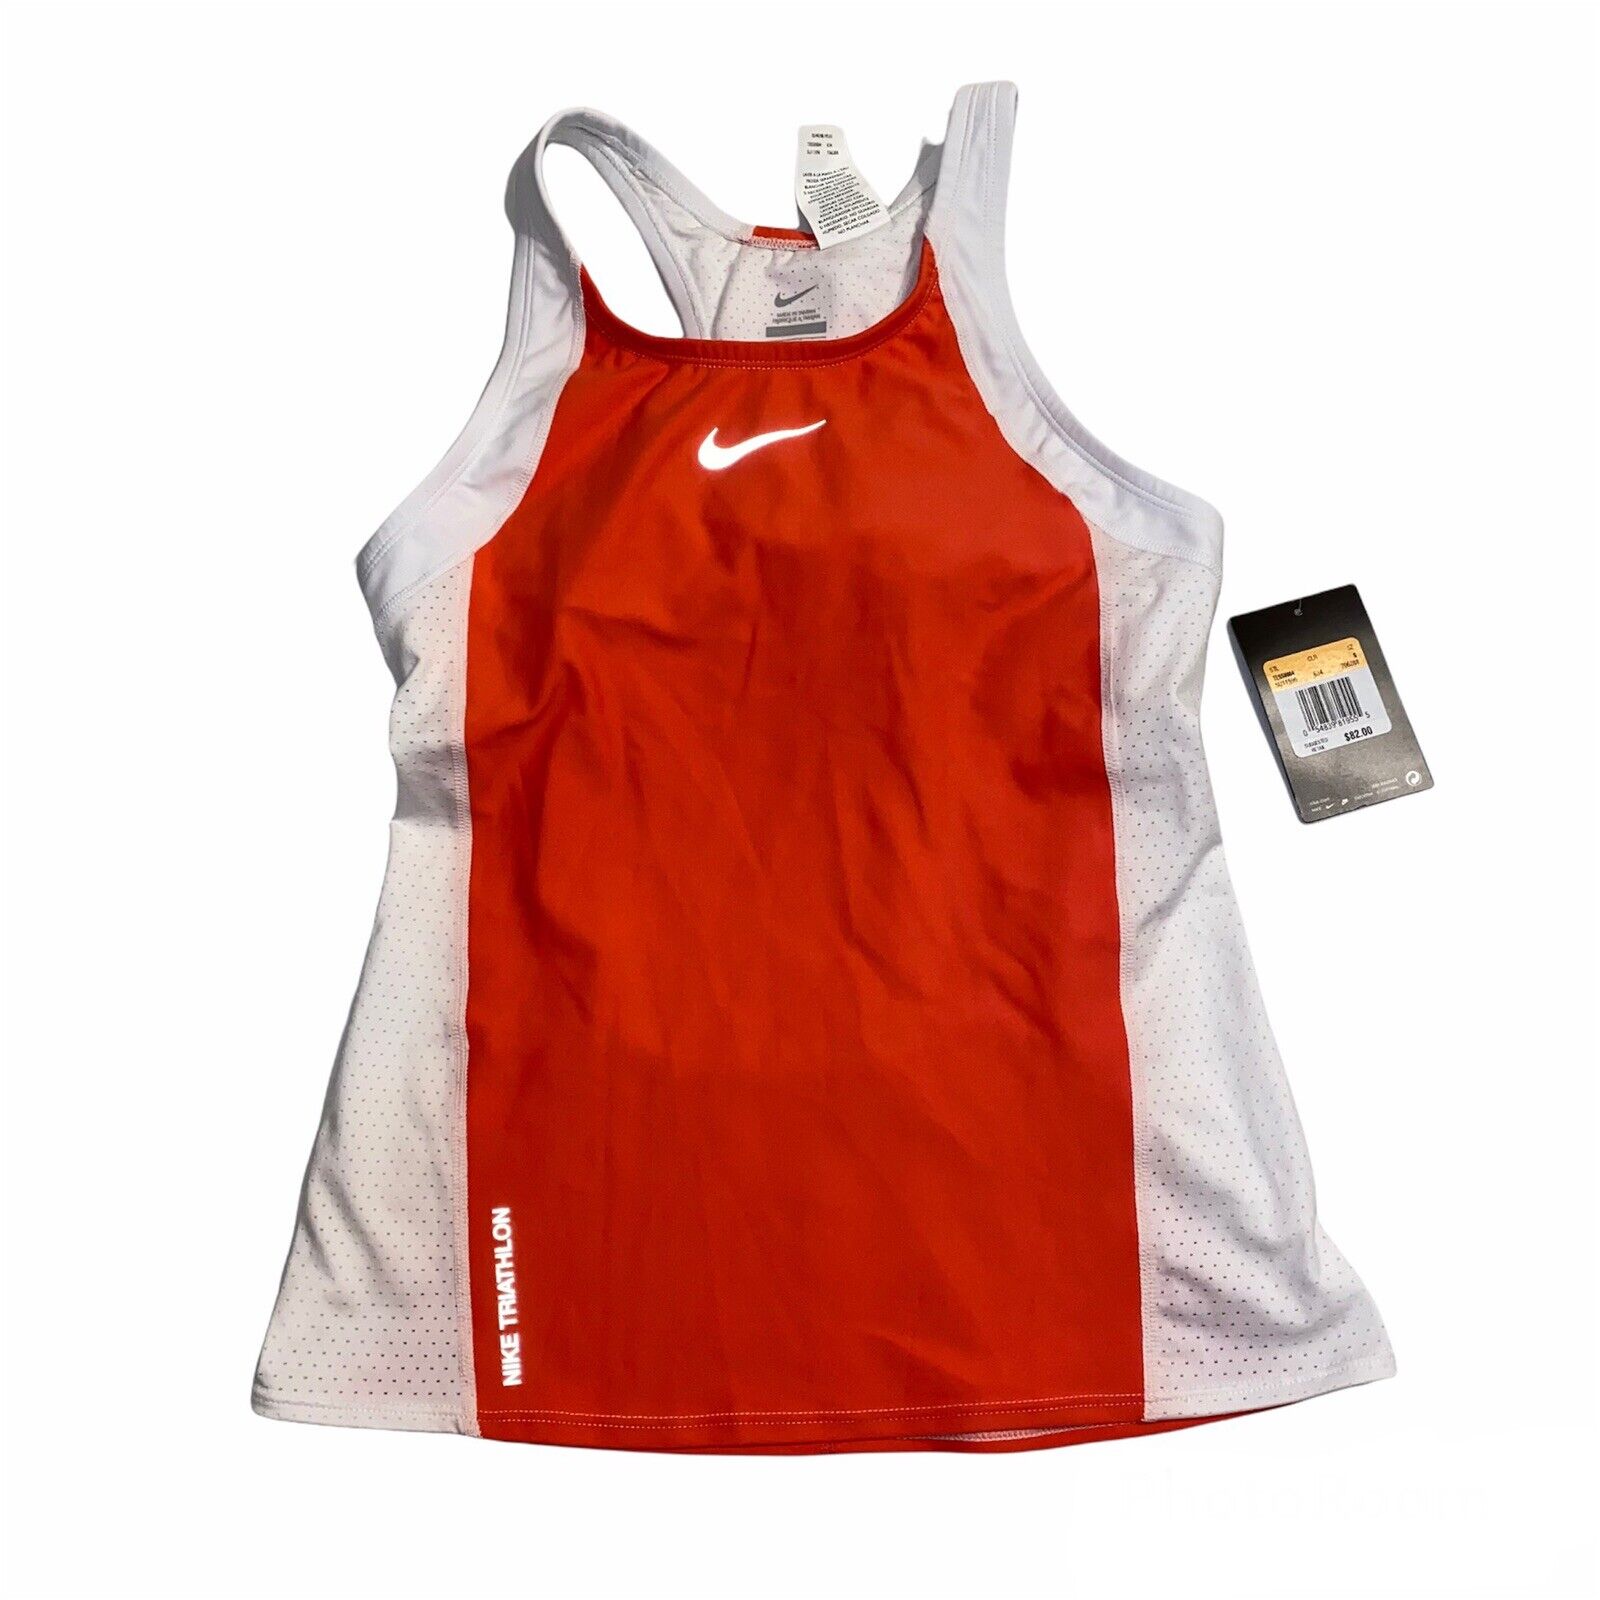 Nike Womens Triathlon Tri Top Shirt Tank White Coral, Size Small $82 706288-634